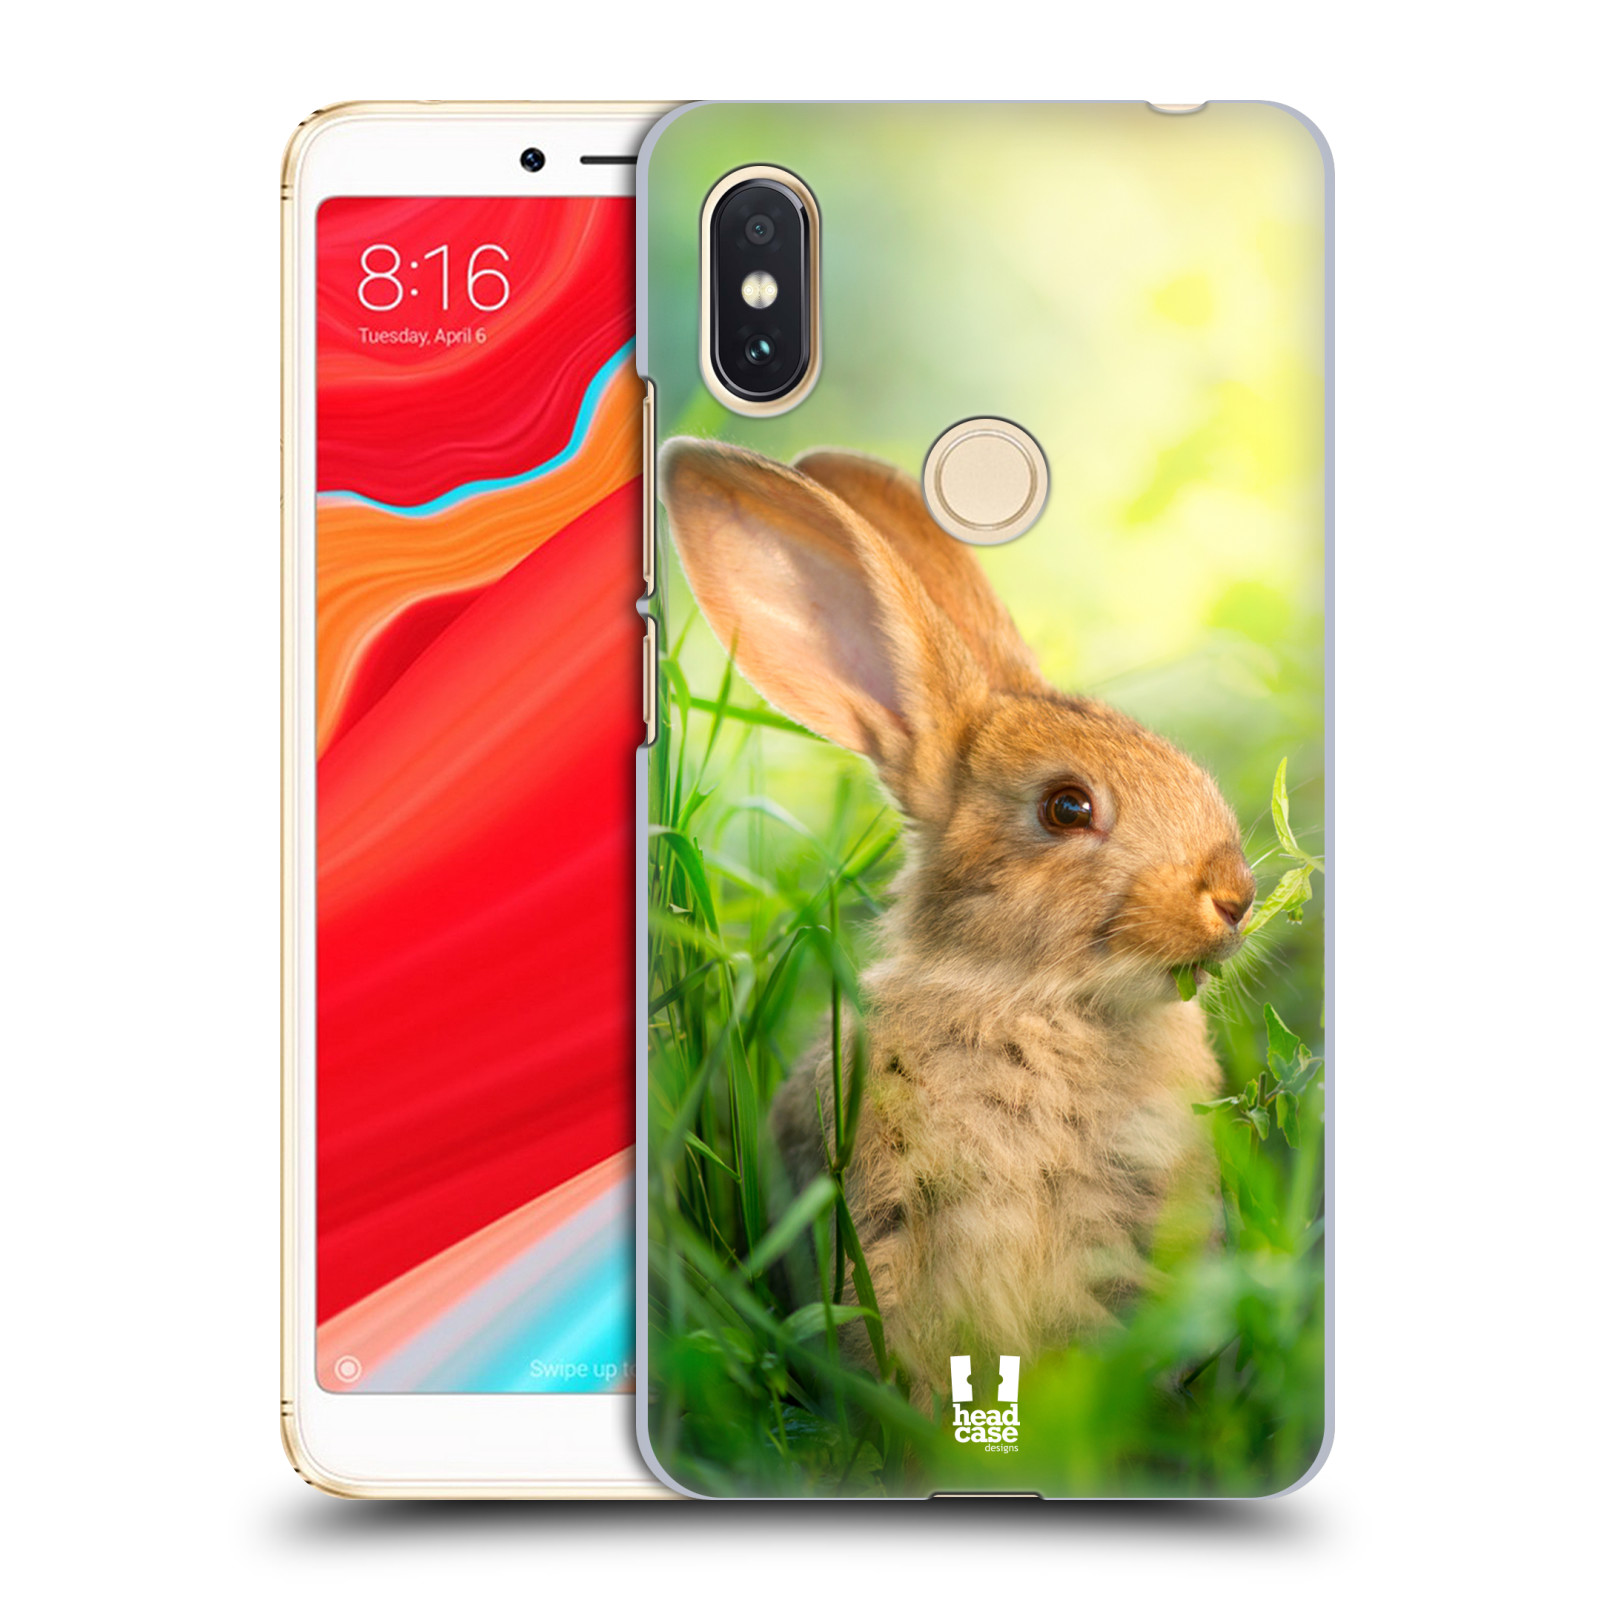 HEAD CASE plastový obal na mobil Xiaomi Redmi S2 vzor Divočina, Divoký život a zvířata foto ZAJÍČEK V TRÁVĚ ZELENÁ